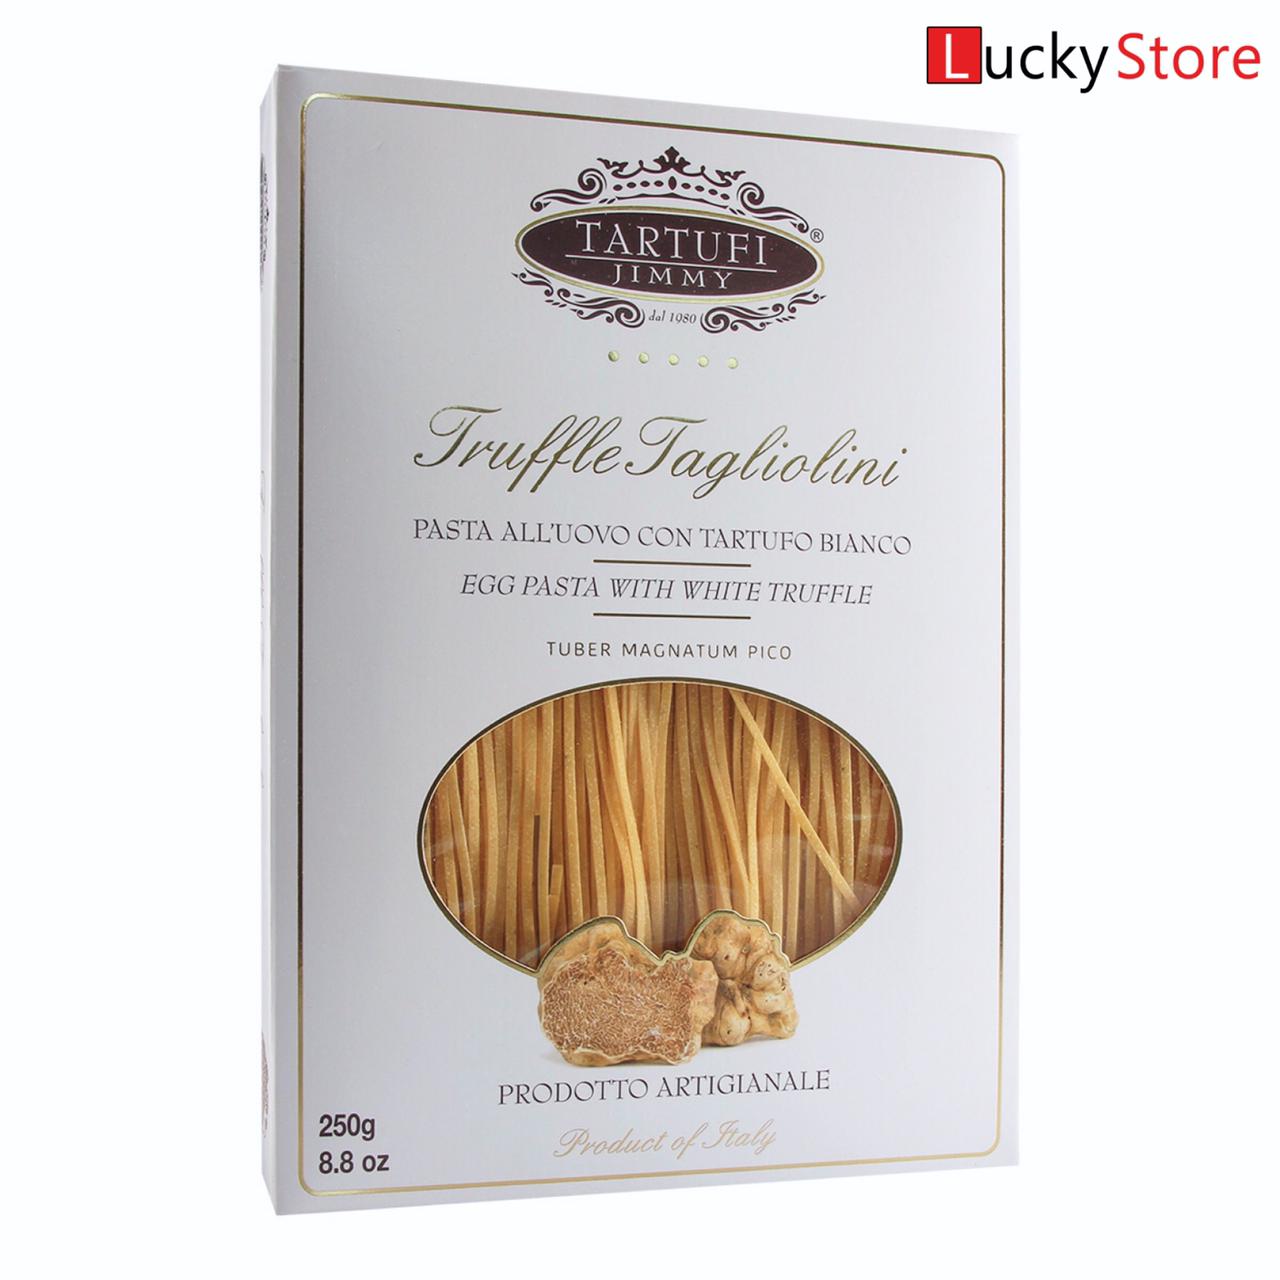 Buy Tartufi Jimmy White Truffle Tagliolini Pasta